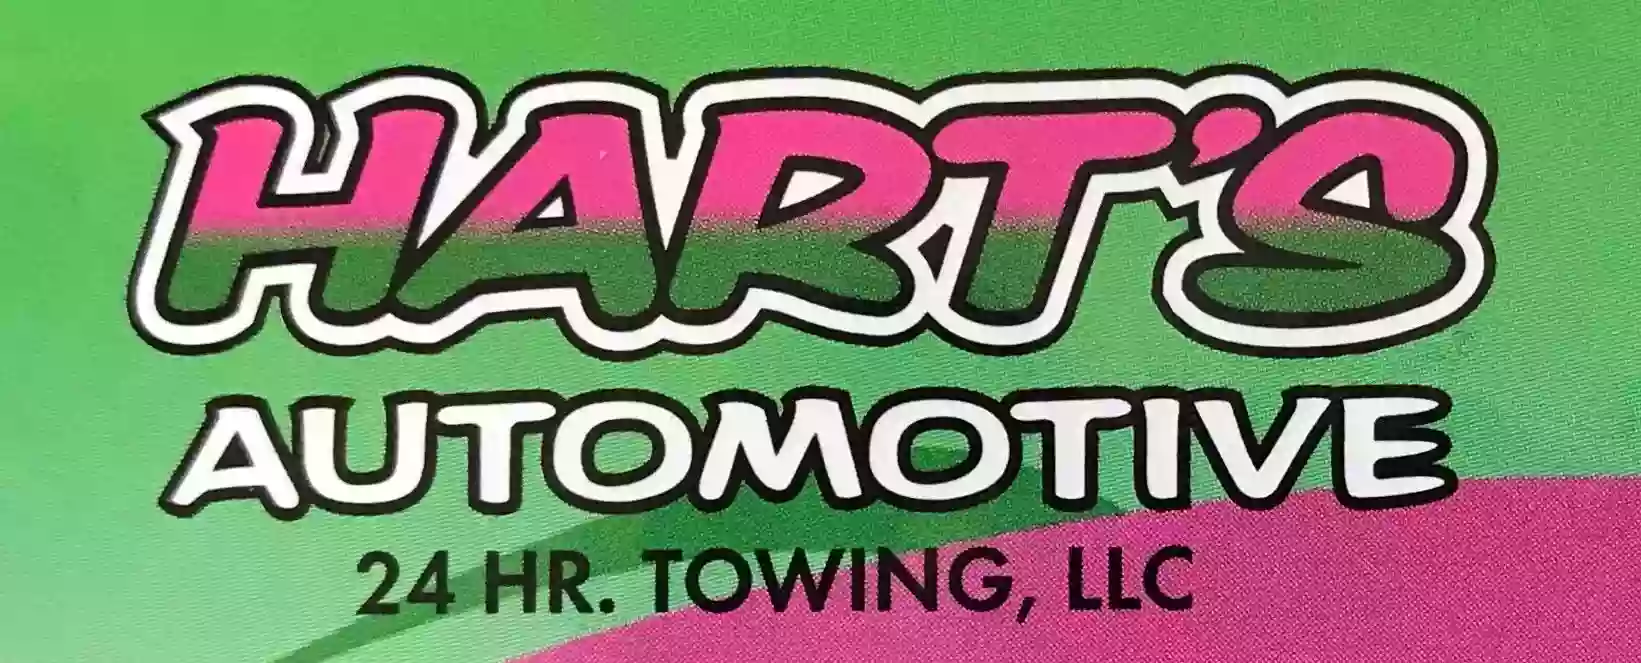 Hart's Automotive & 24-Hour Towing